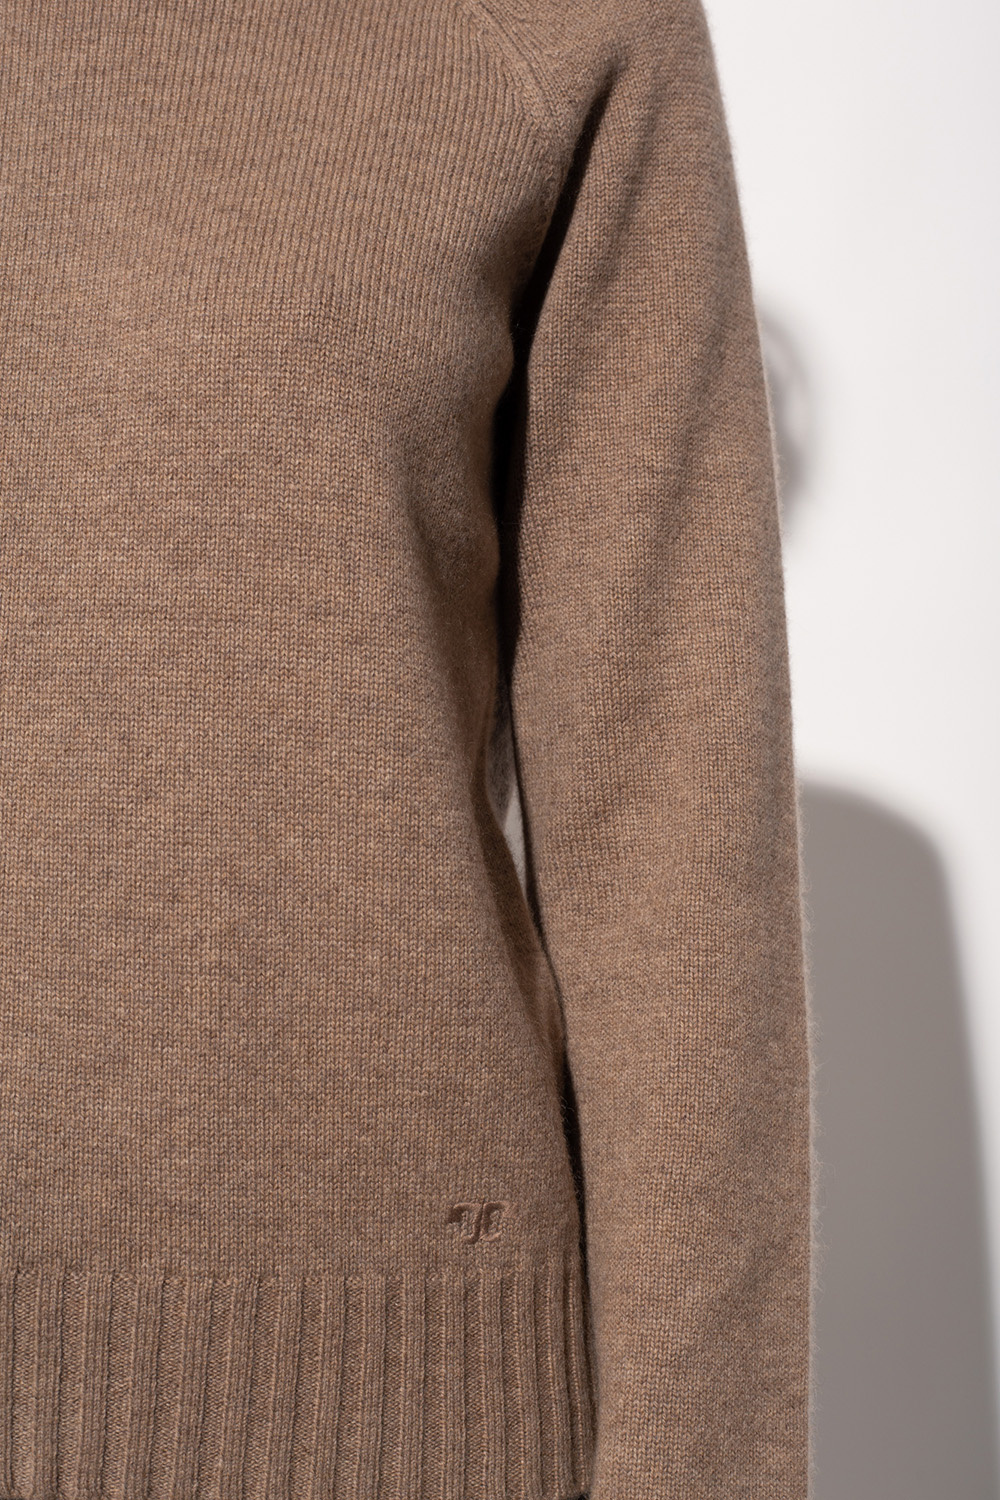 Brown Cashmere turtleneck sweater Tory Burch - Vitkac France